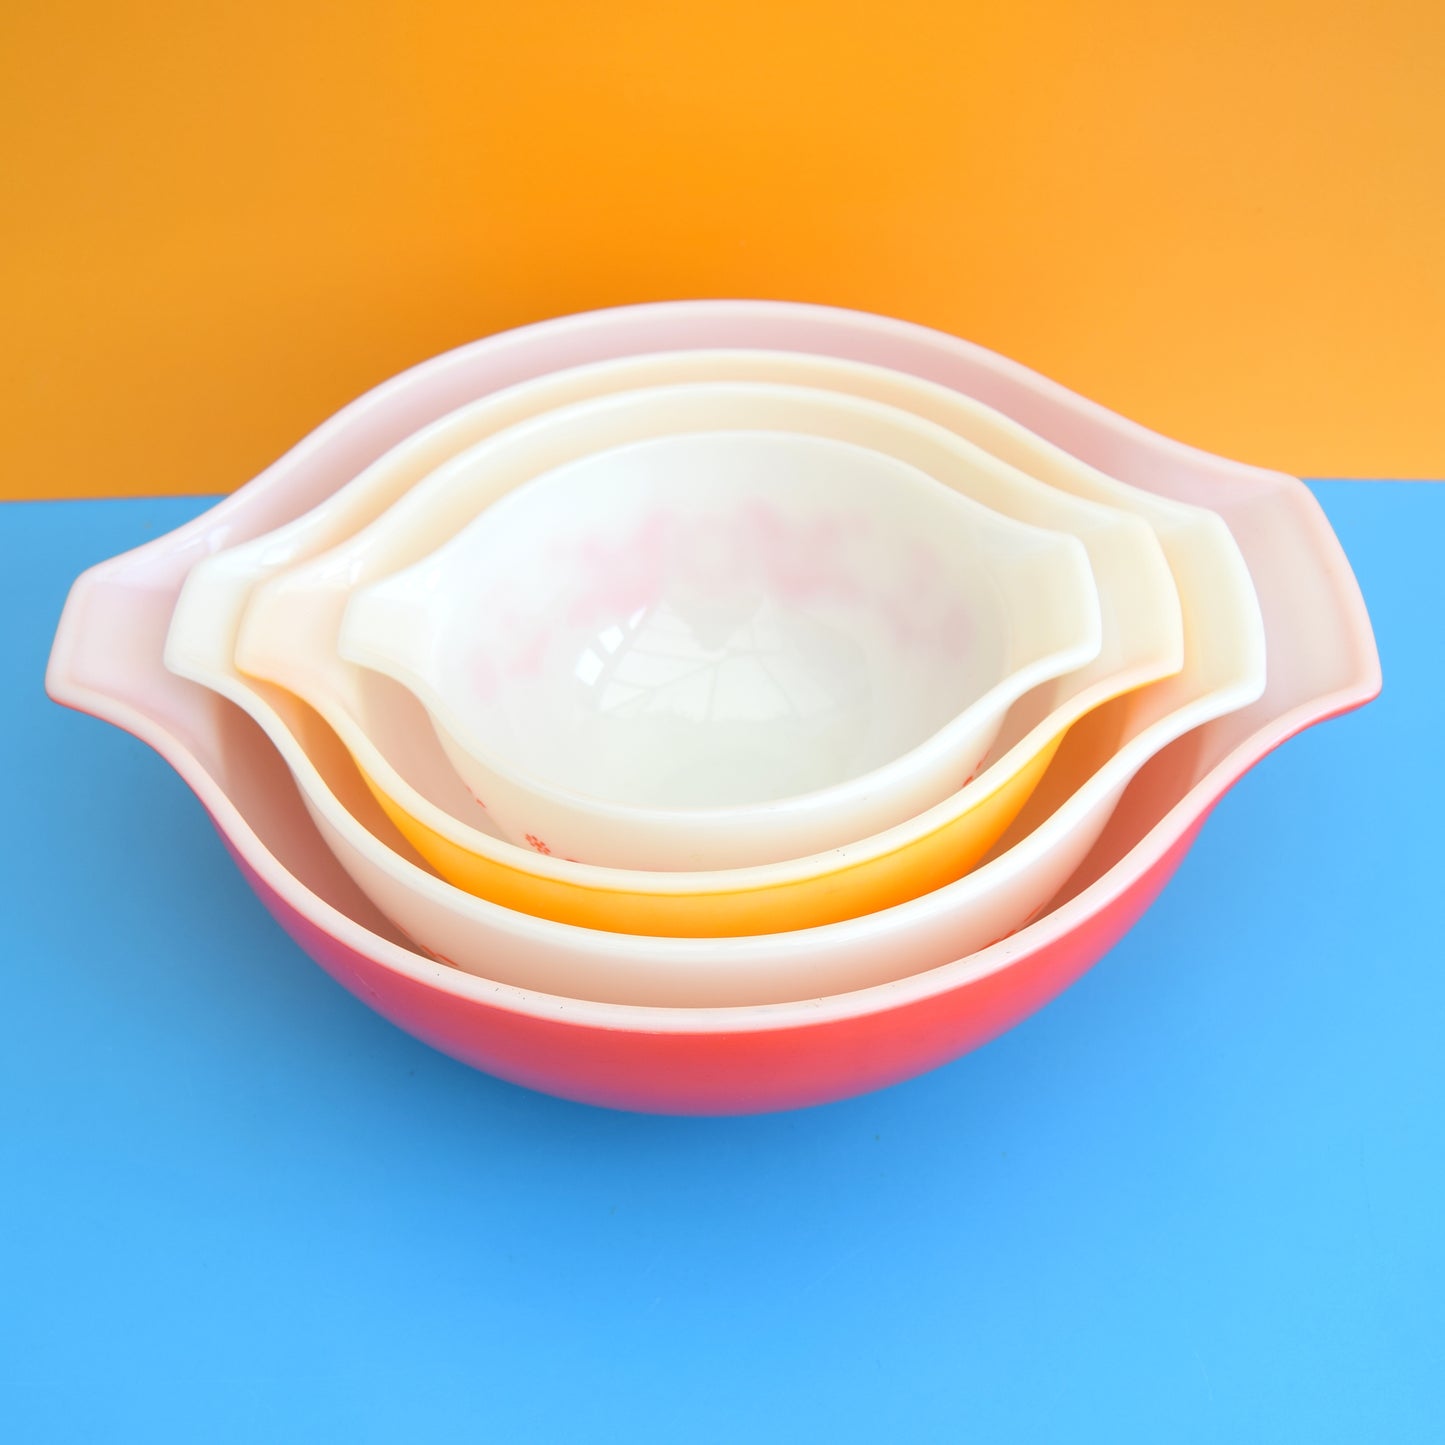 Vintage Pyrex Glass - Cinderella Nesting Bowls - Friendship Pattern